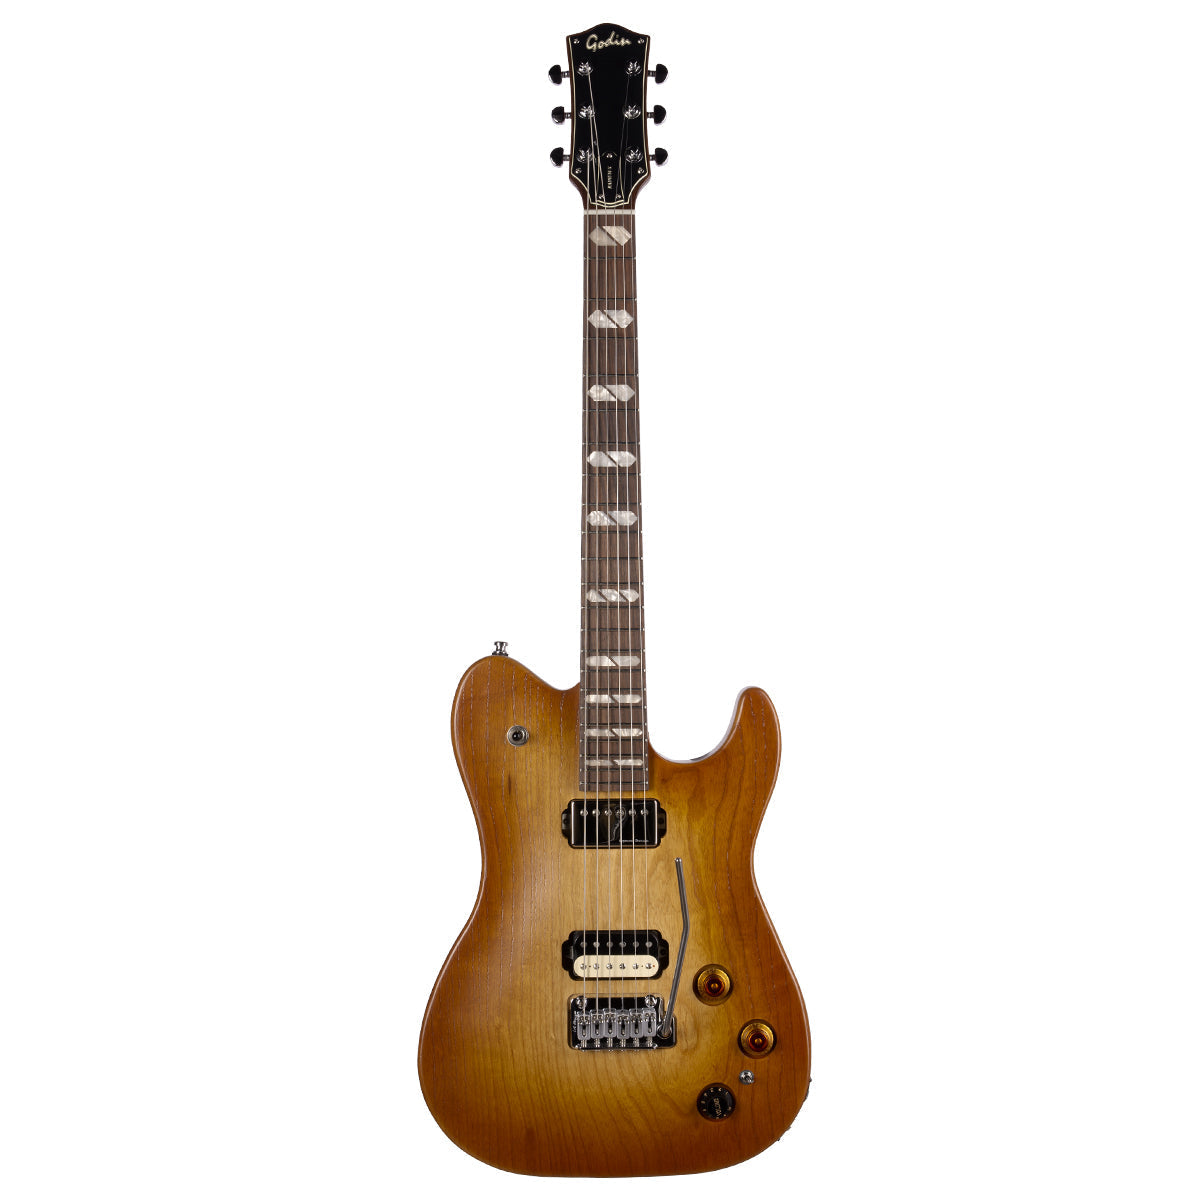 Godin Radium-X Electric Guitar ~ Rustic Burst SG, Electric Guitar for sale at Richards Guitars.